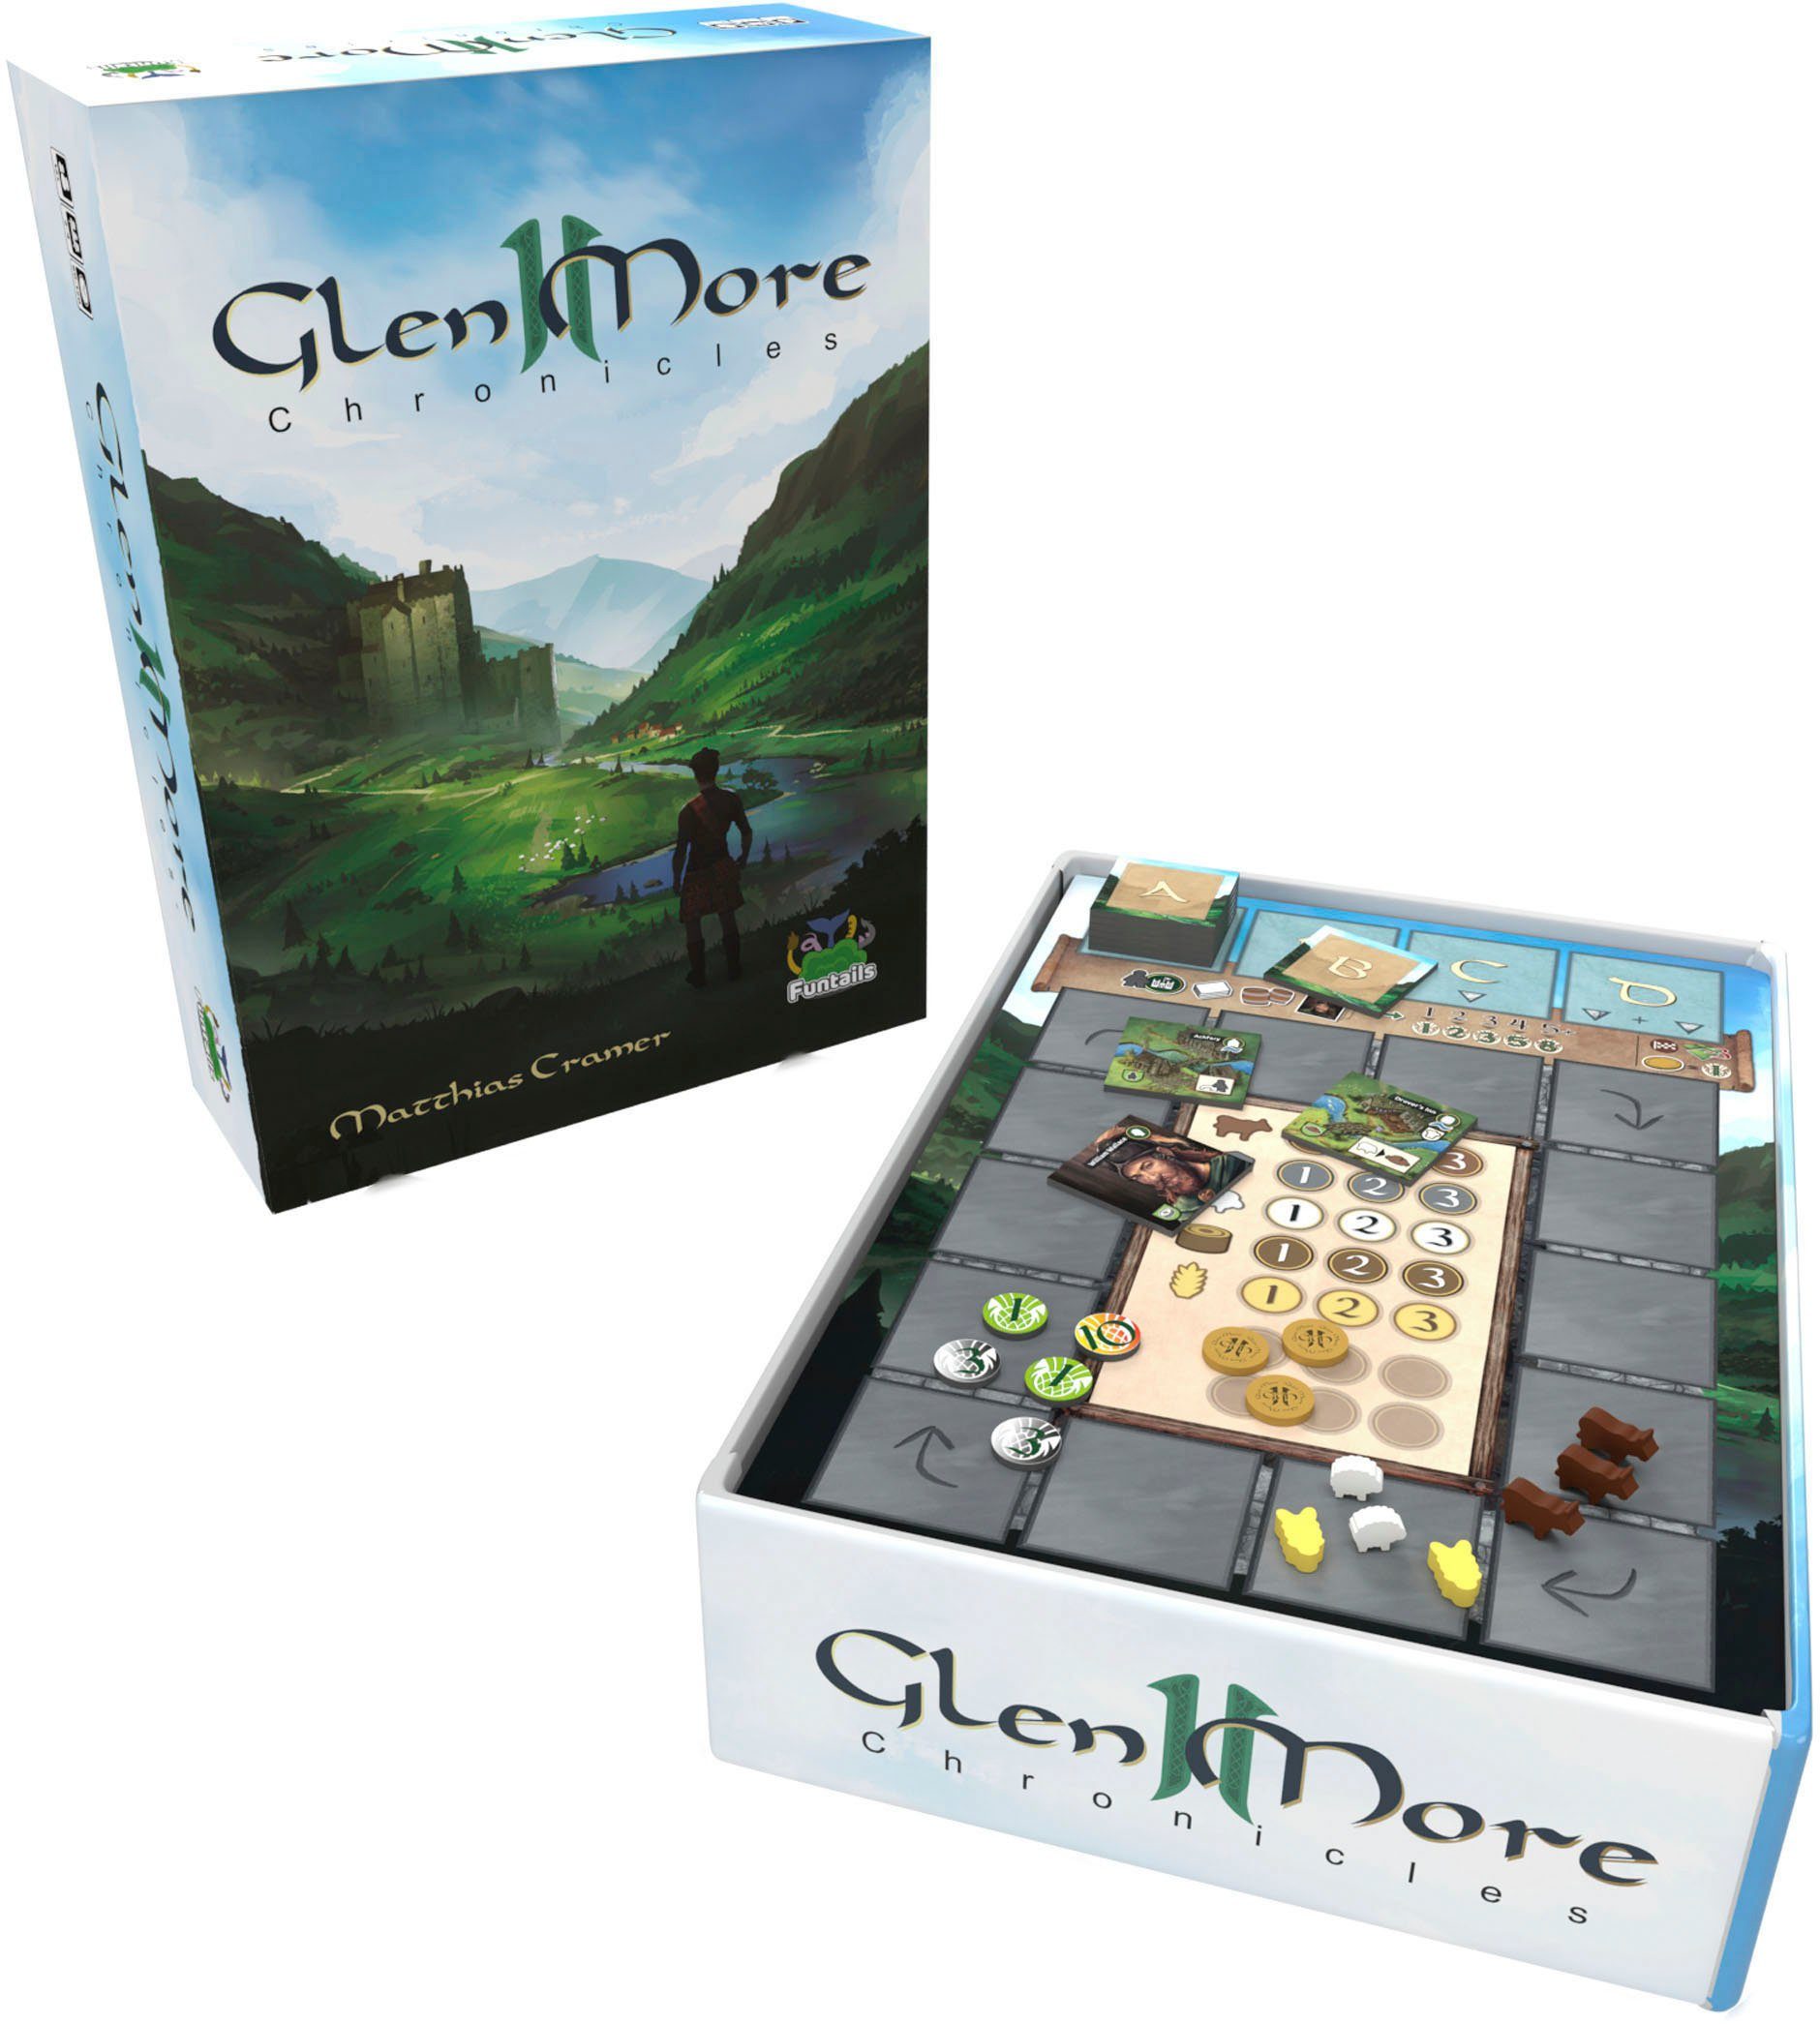 II: Chronicles Glen Spiel, Strategiespiel Funtails More